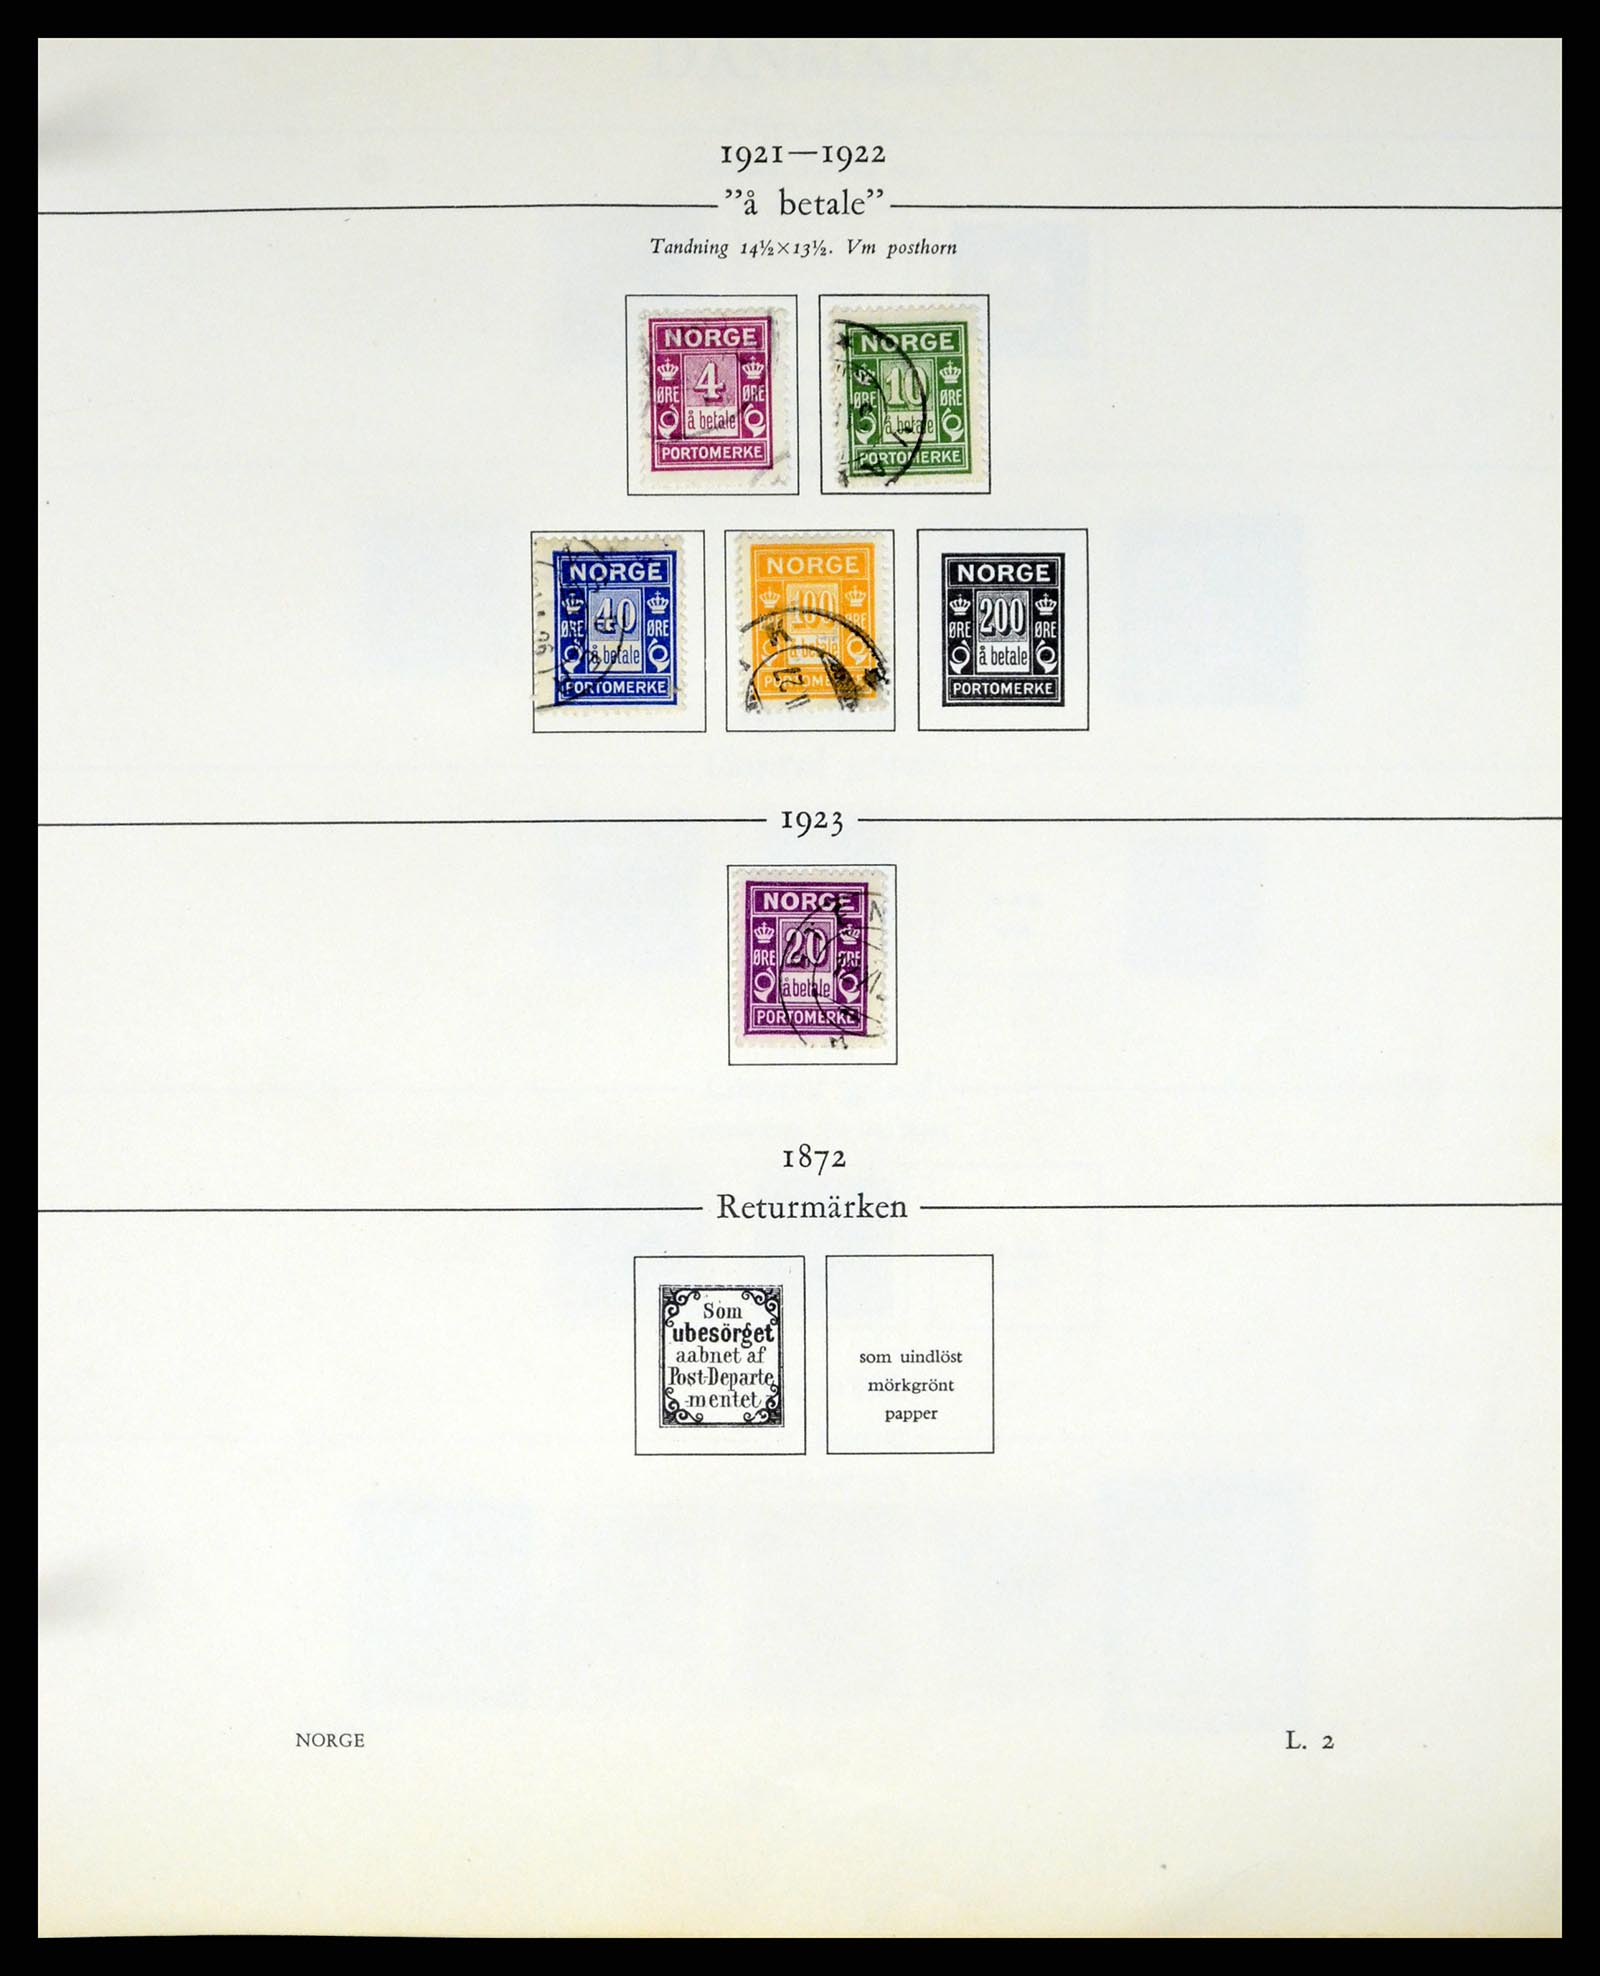 37387 052 - Stamp collection 37387 Scandinavia 1851-1960.